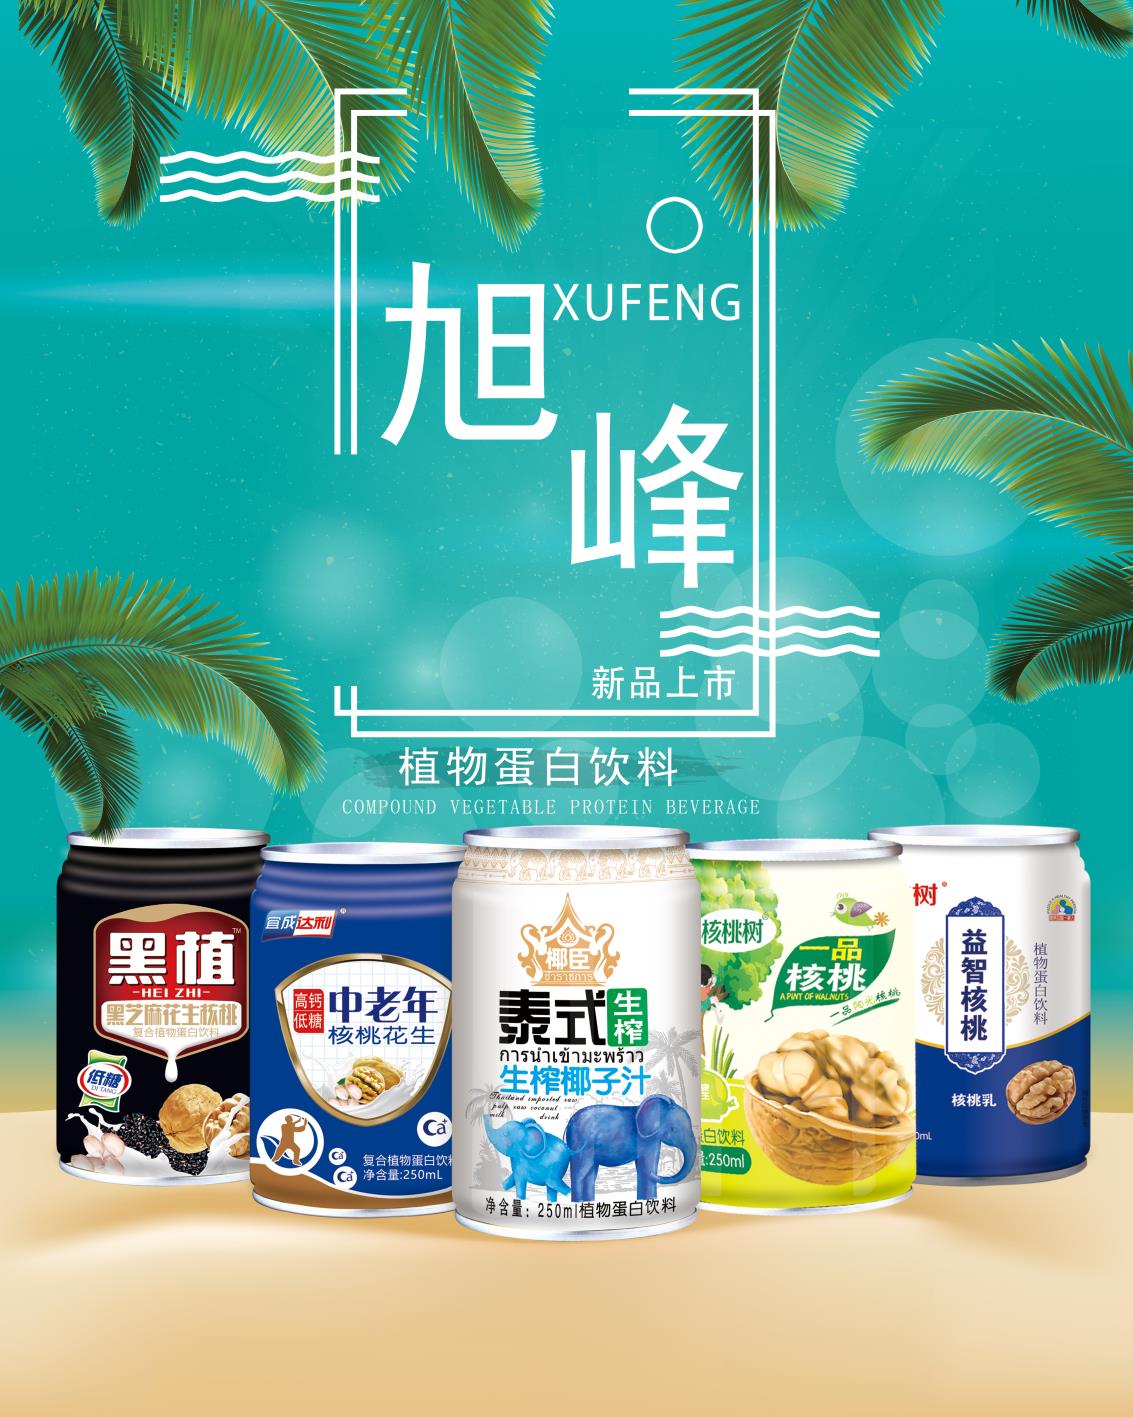 280ml发酵酸奶饮品-含乳饮料-品牌产品-浙江李子园食品股份有限公司